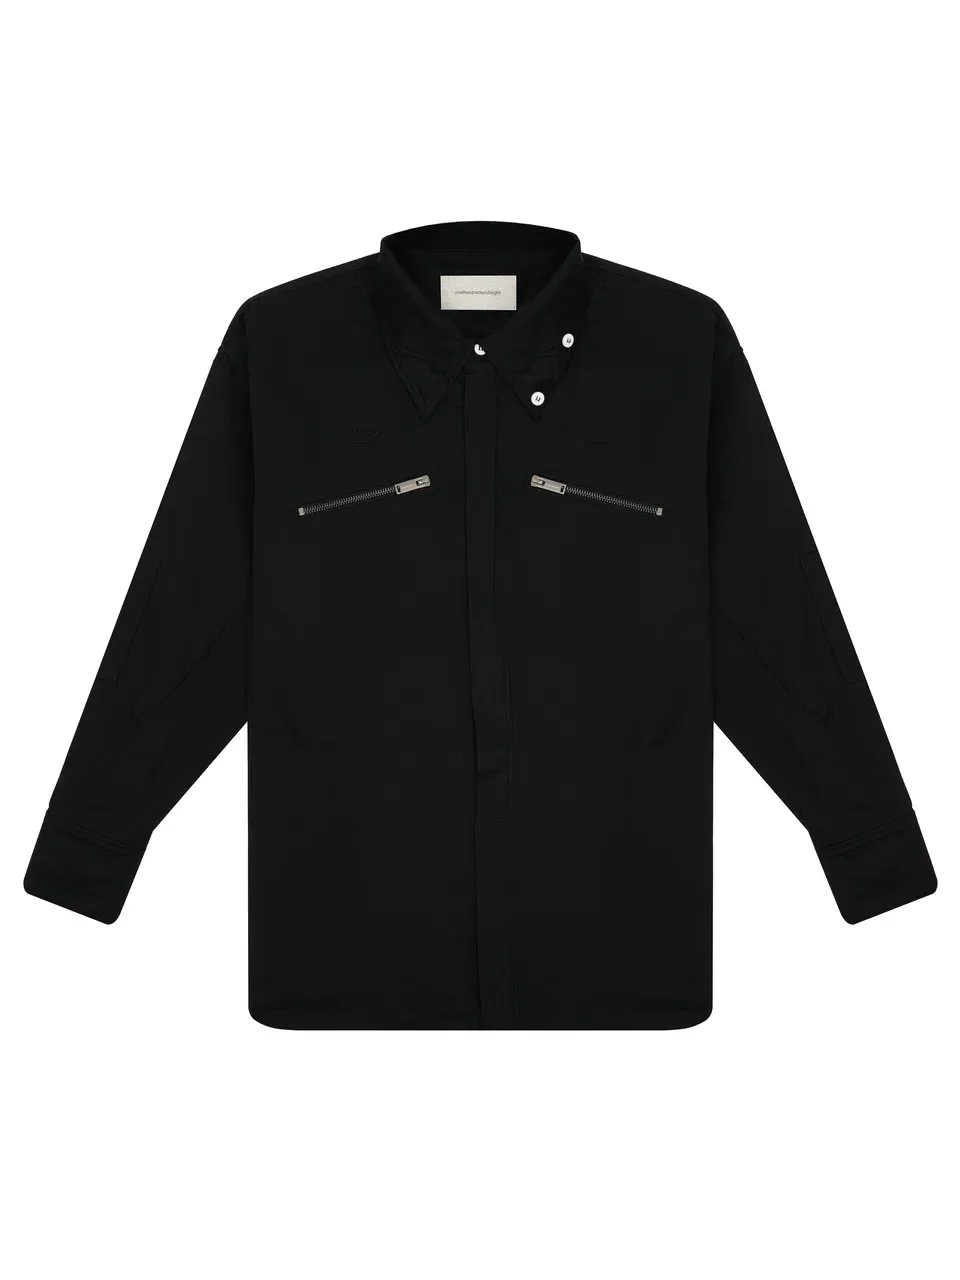 Рубашка «002» черная, размер: S